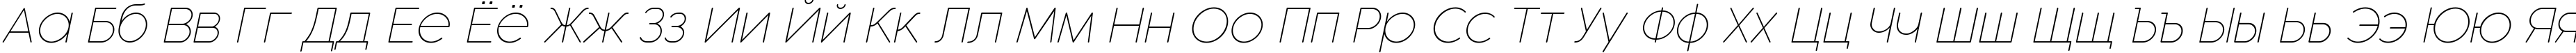 Пример написания русского алфавита шрифтом Cocogoose Pro Thin Italic